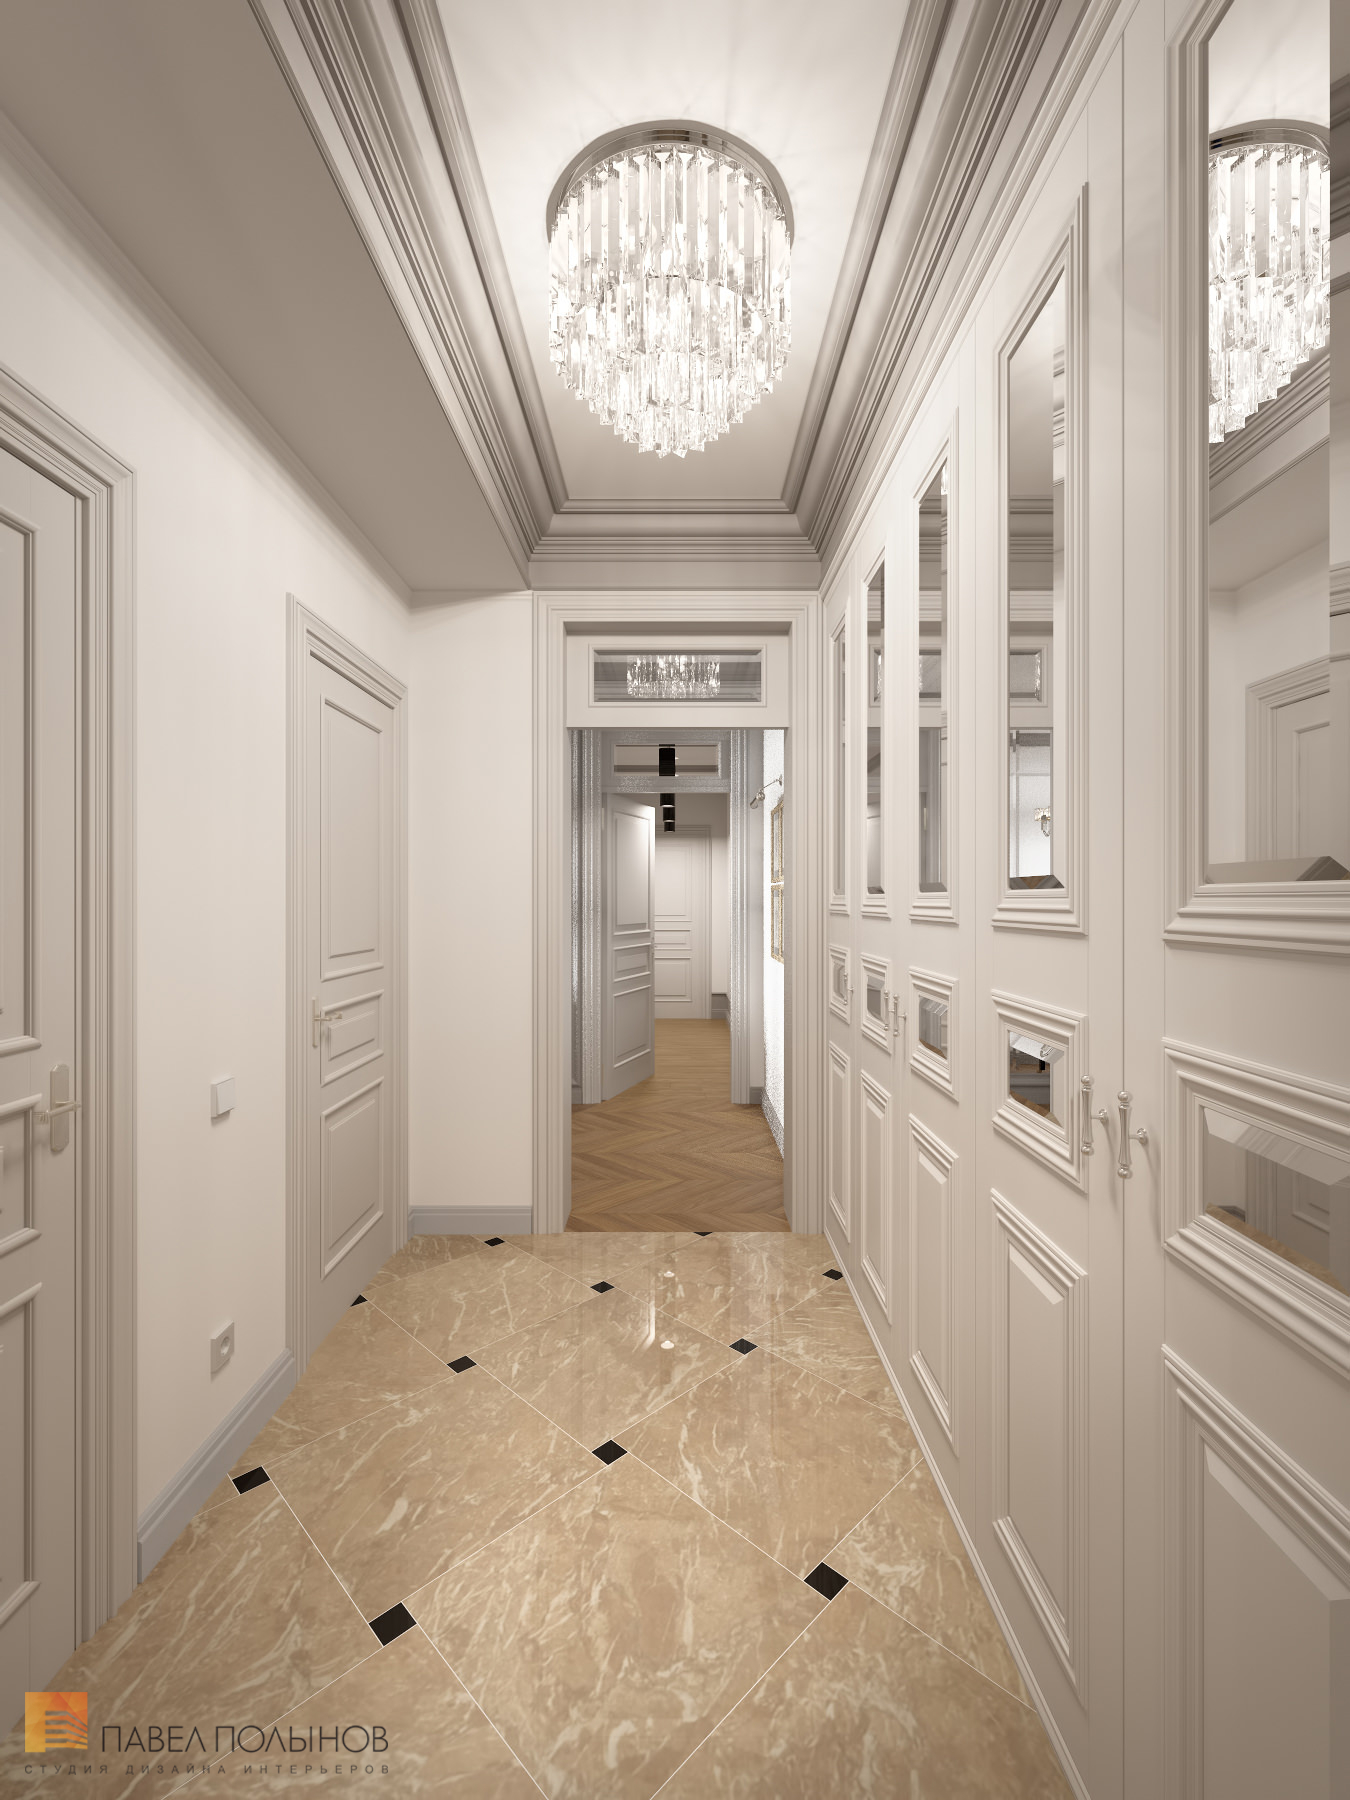 Фото коридор из проекта «Интерьер квартиры в стиле неоклассики, ЖК «Парадный квартал», 190 кв.м.»